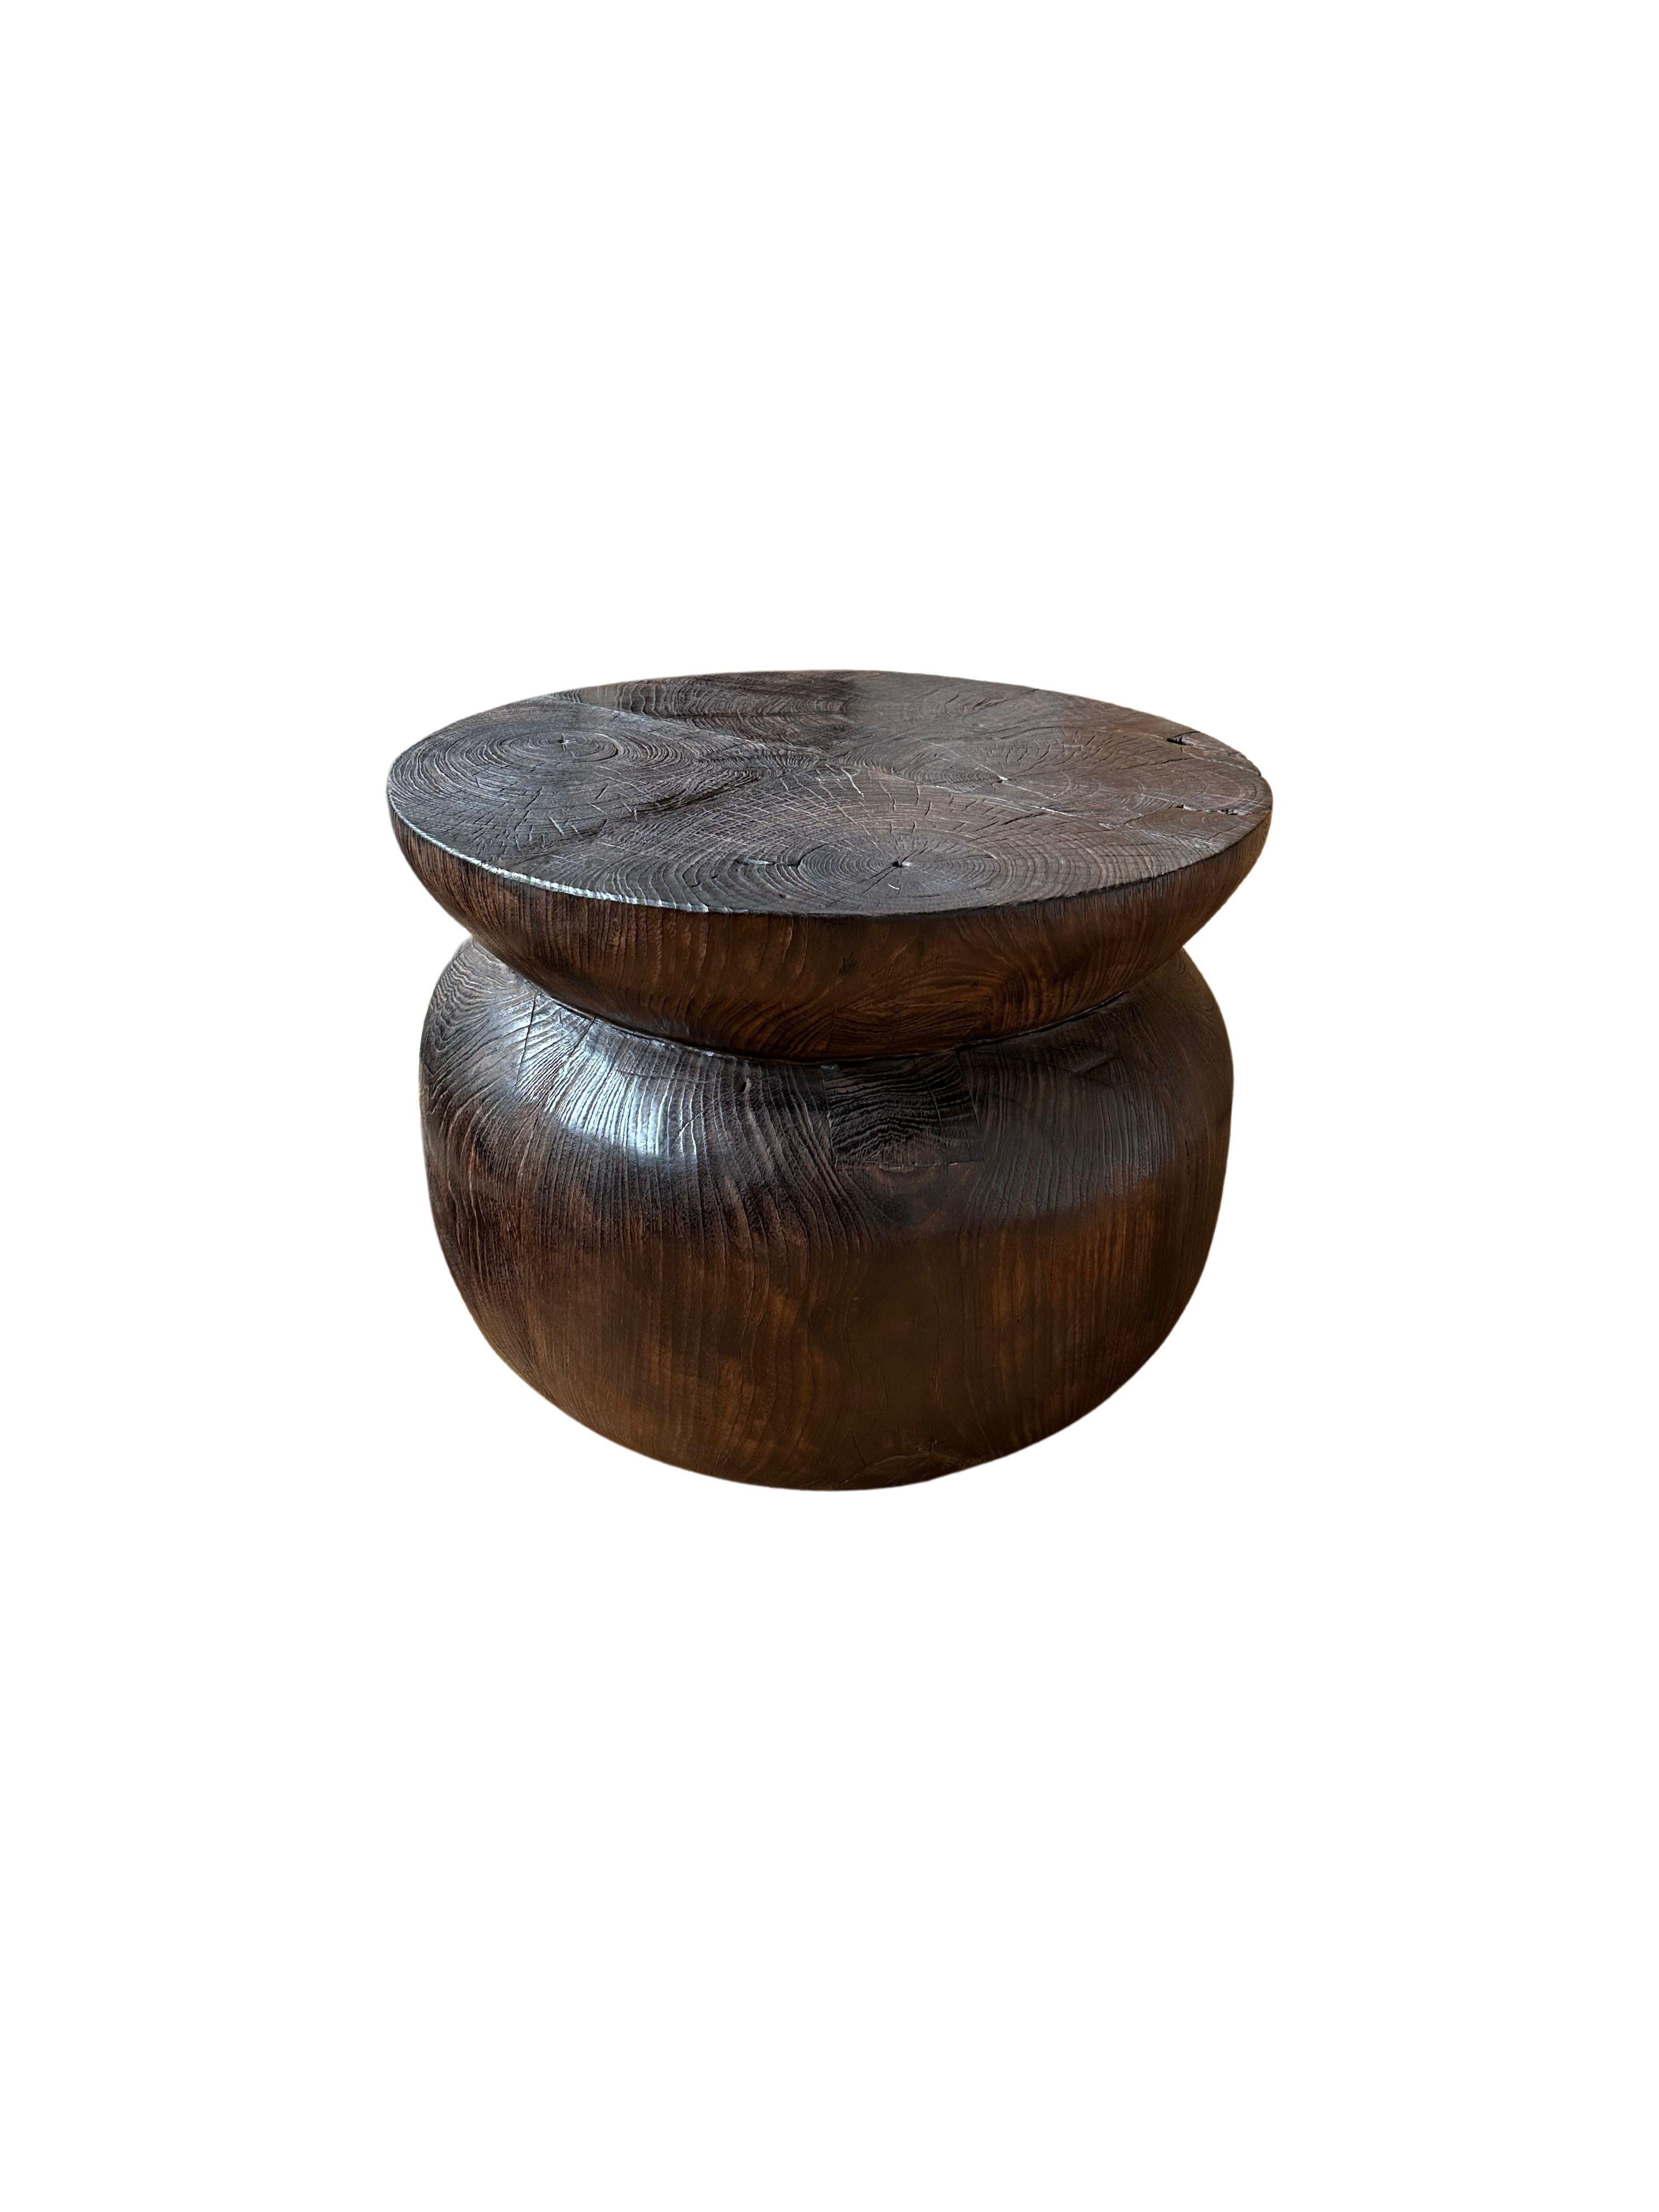 Organic Modern Sculptural Round Teak Wood Side Table, Burnt Finish, Modern Organic For Sale